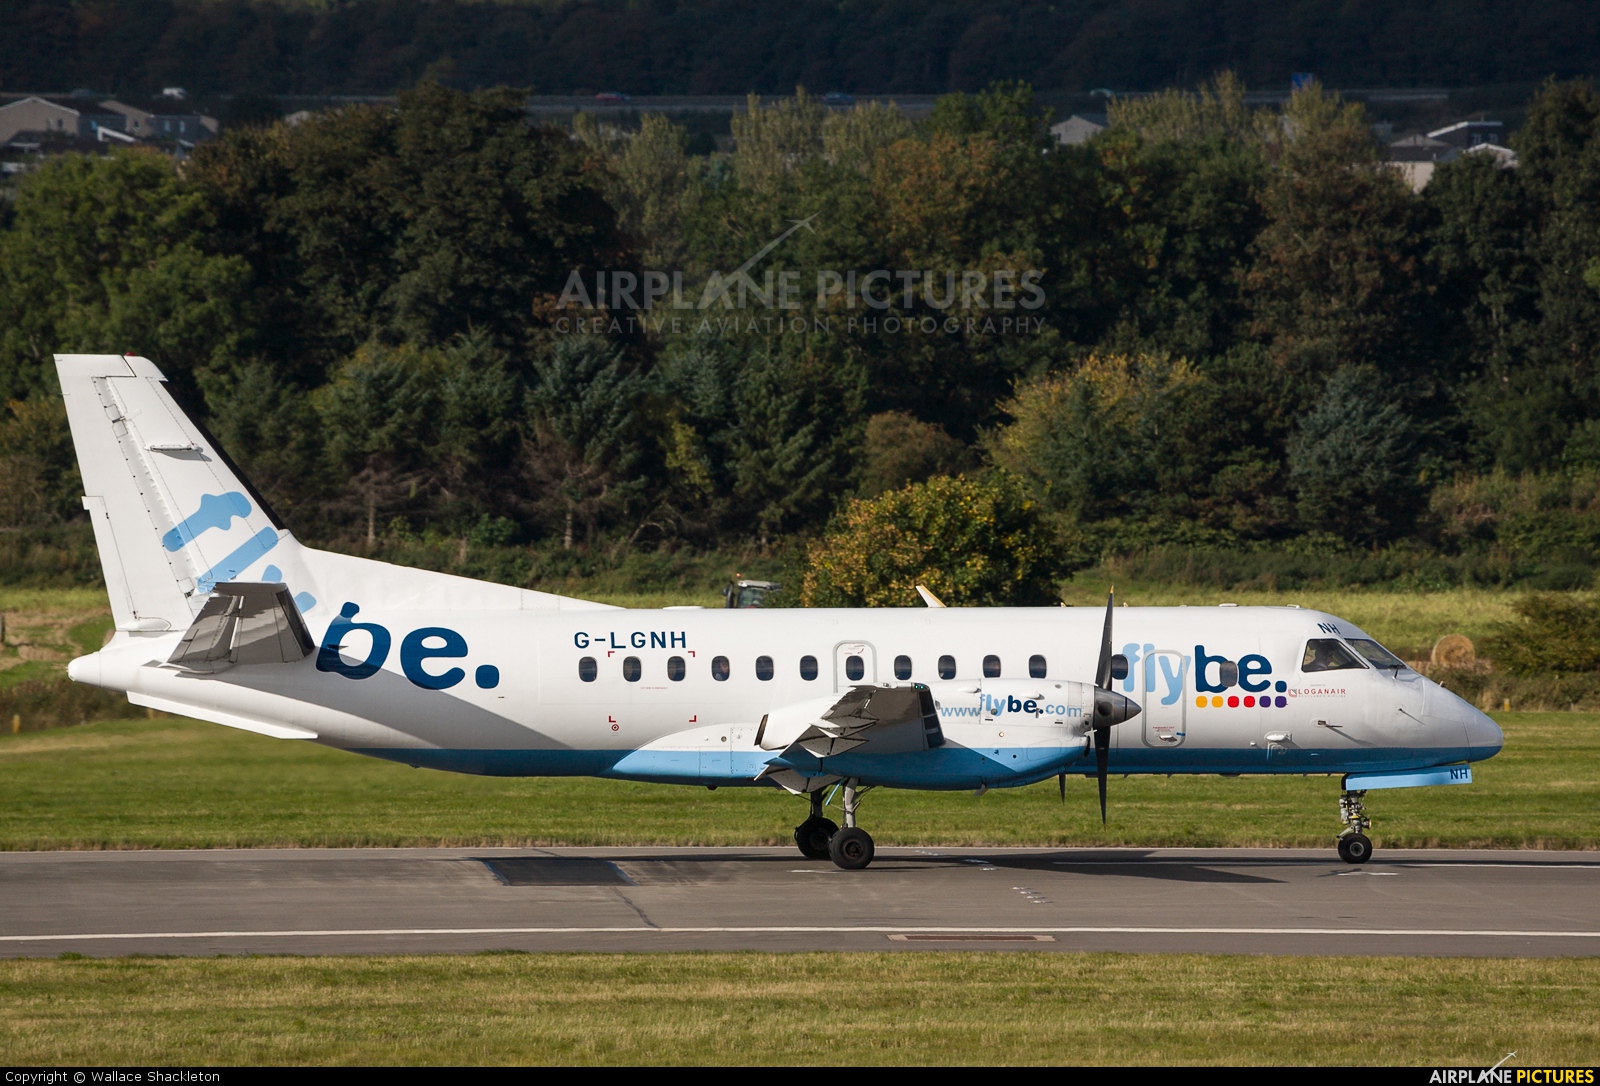 FlyBe - Loganair G-LGNH aircraft at Edinburgh